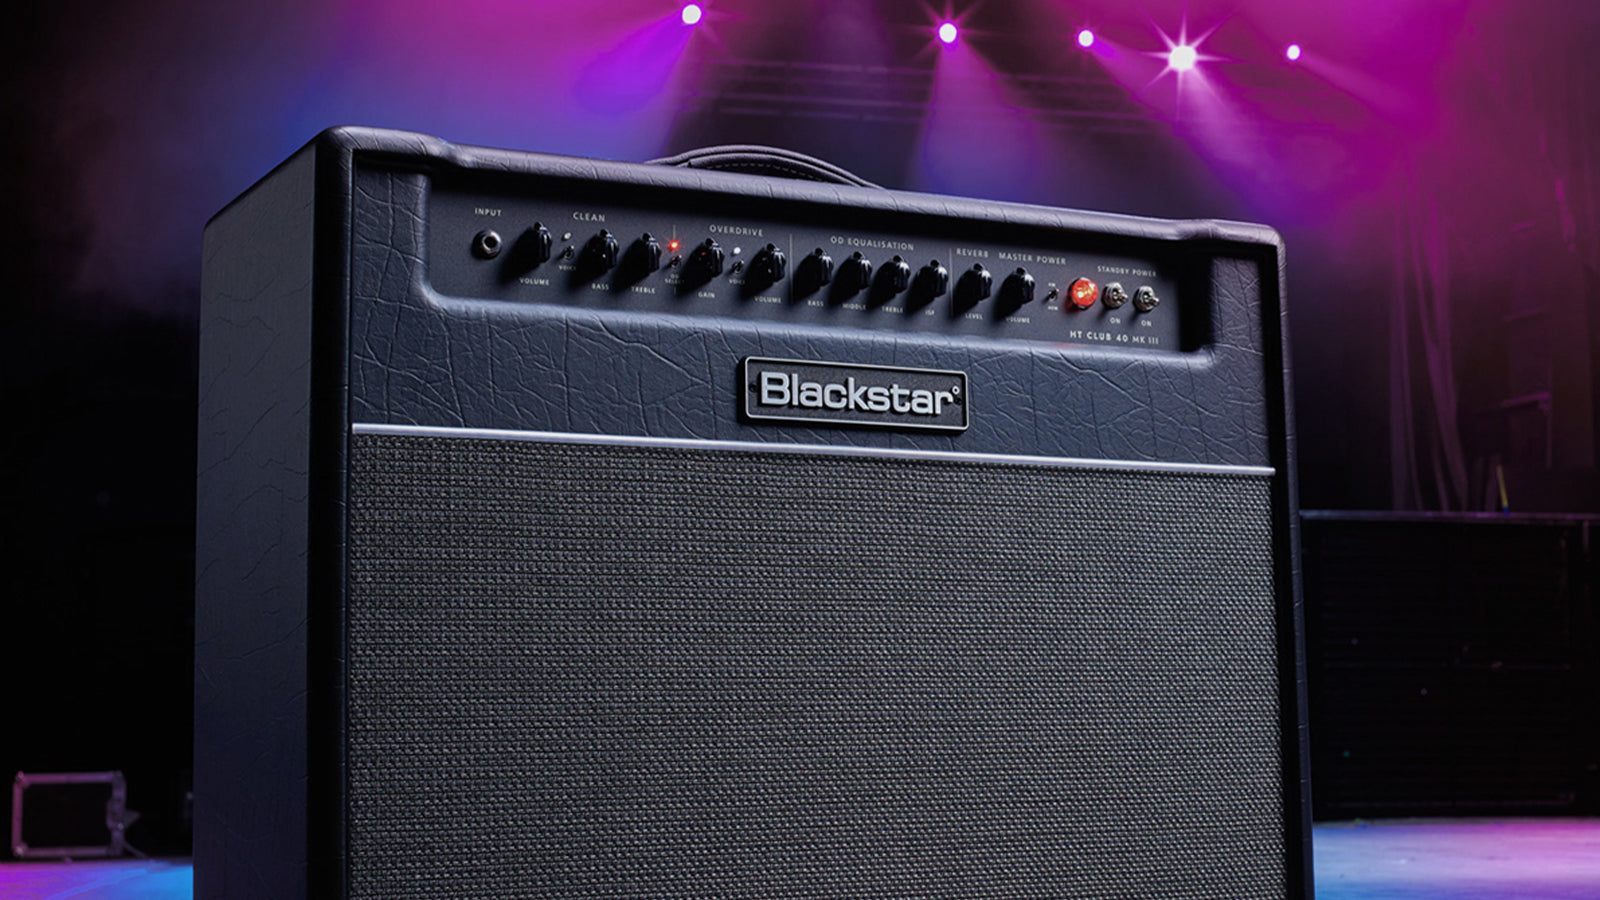  Blackstar Amplifier on a lit stage